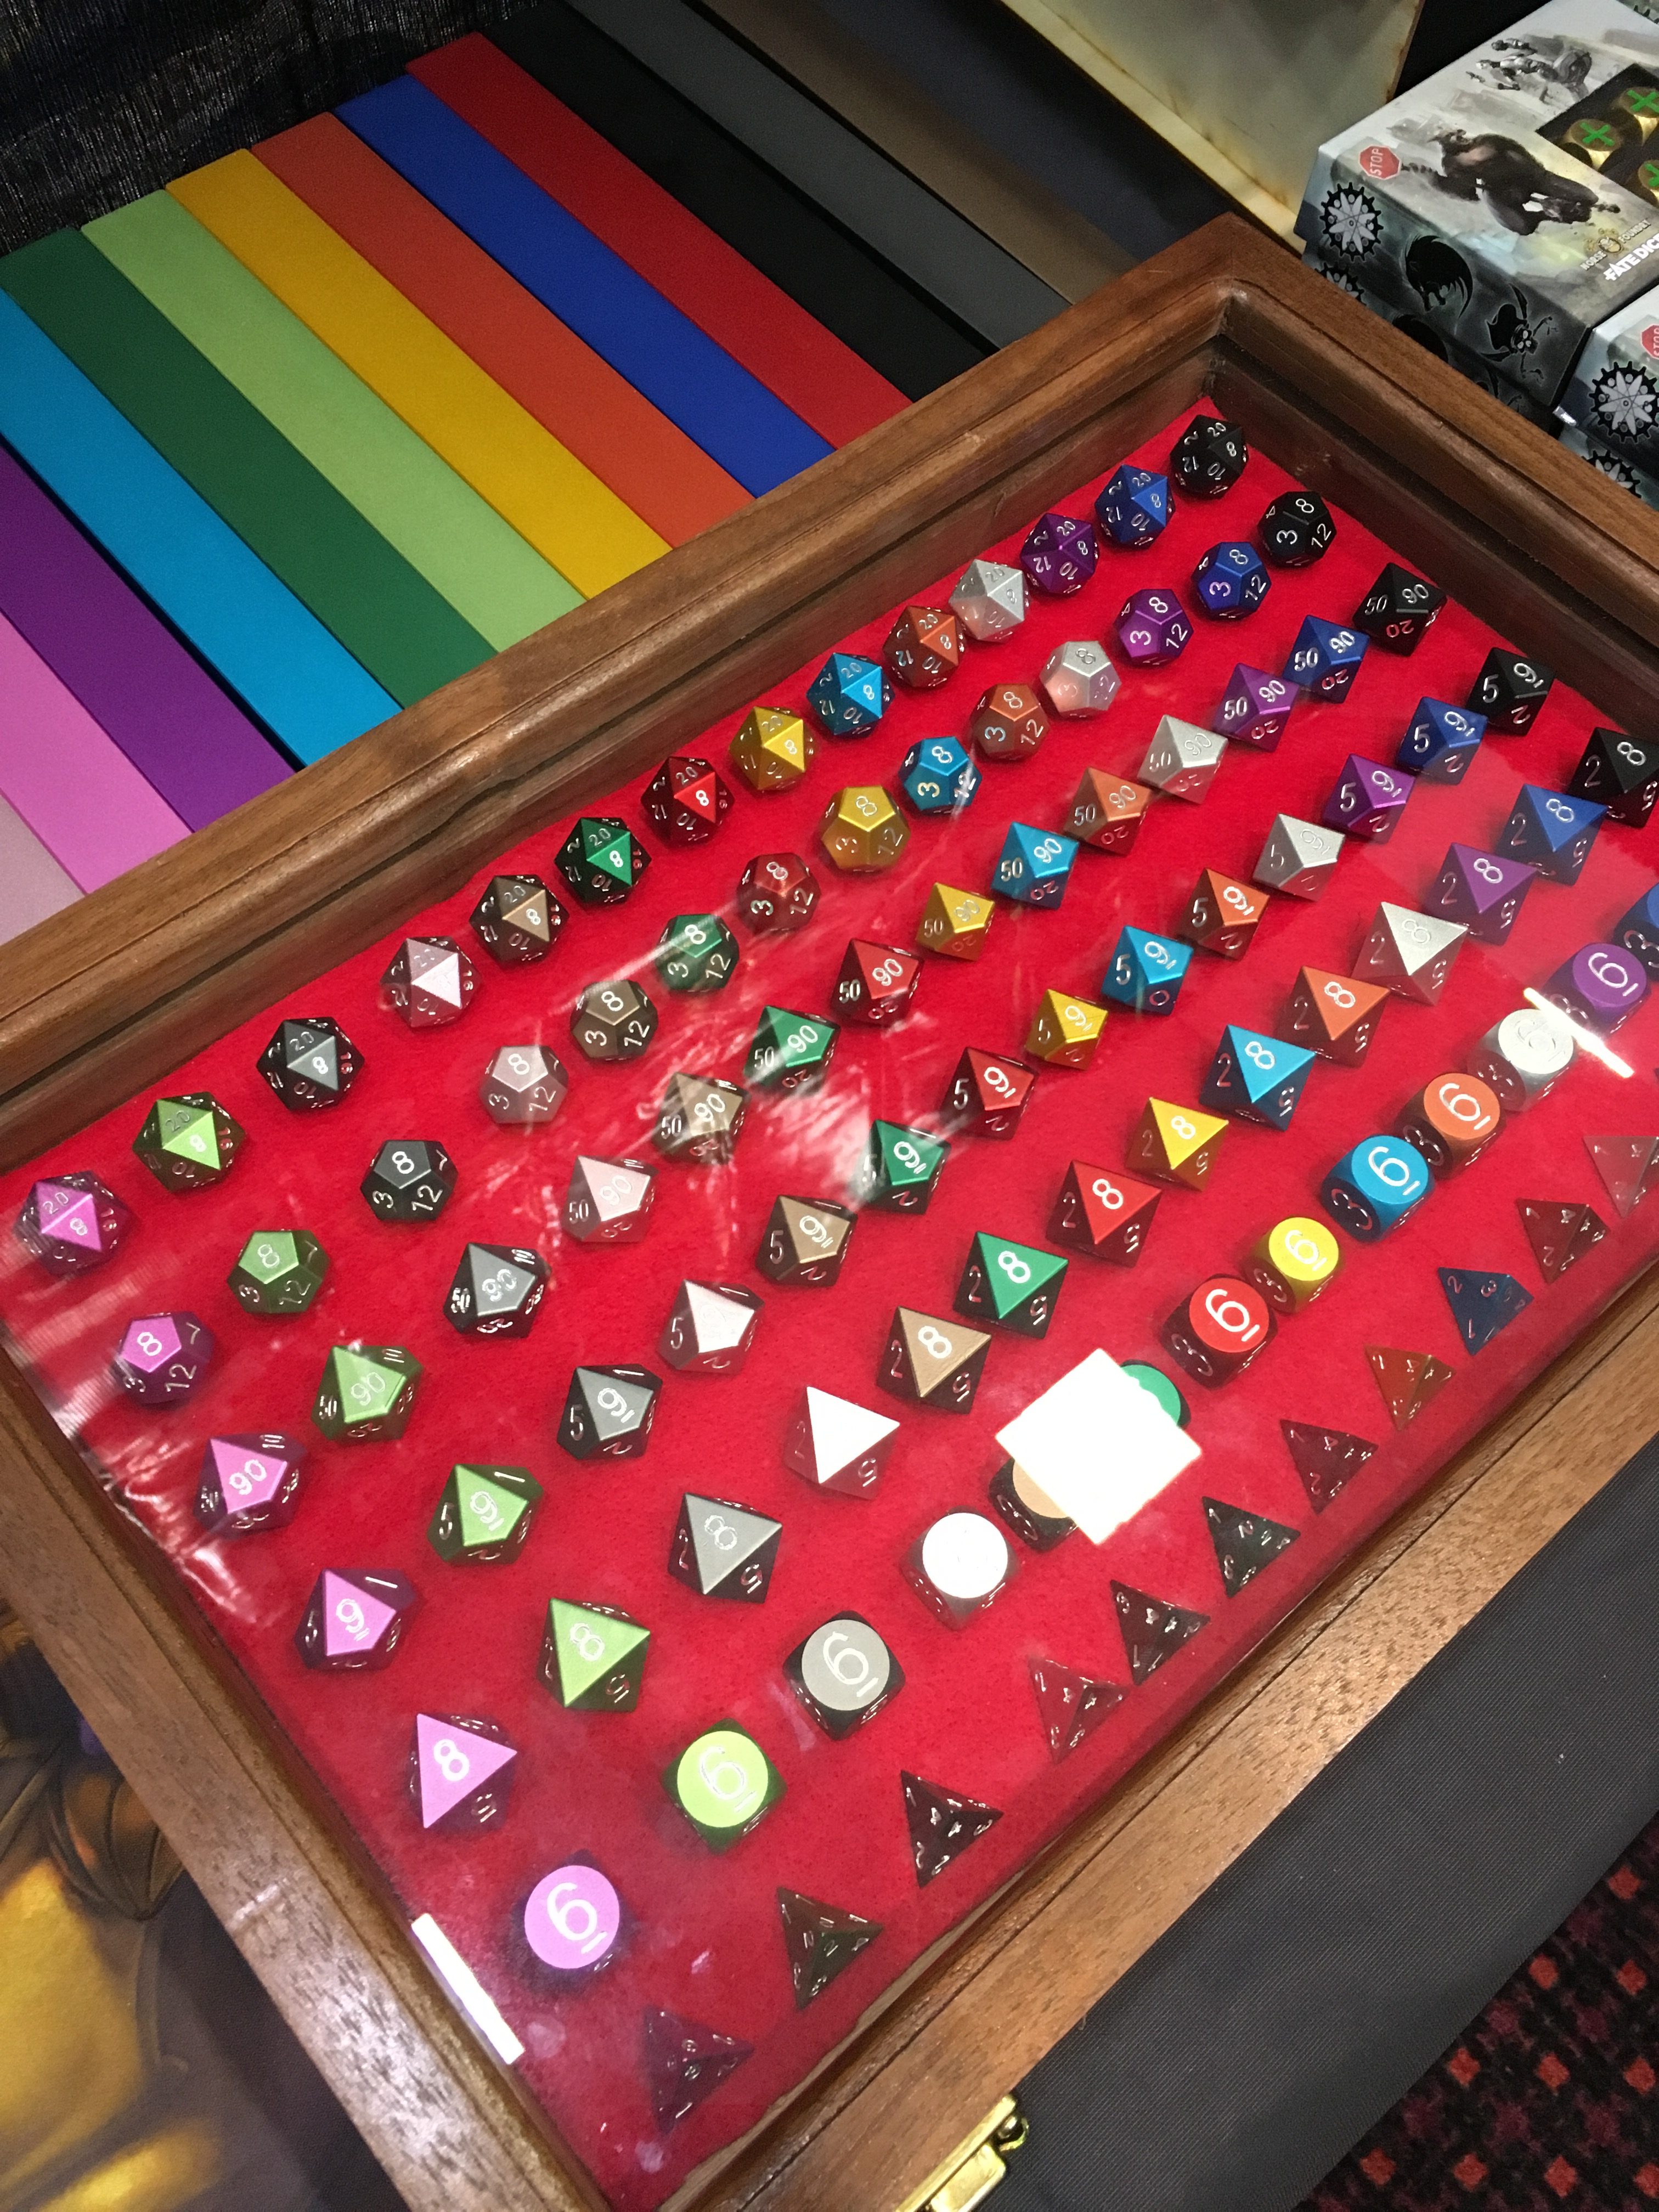 Metal dice on display